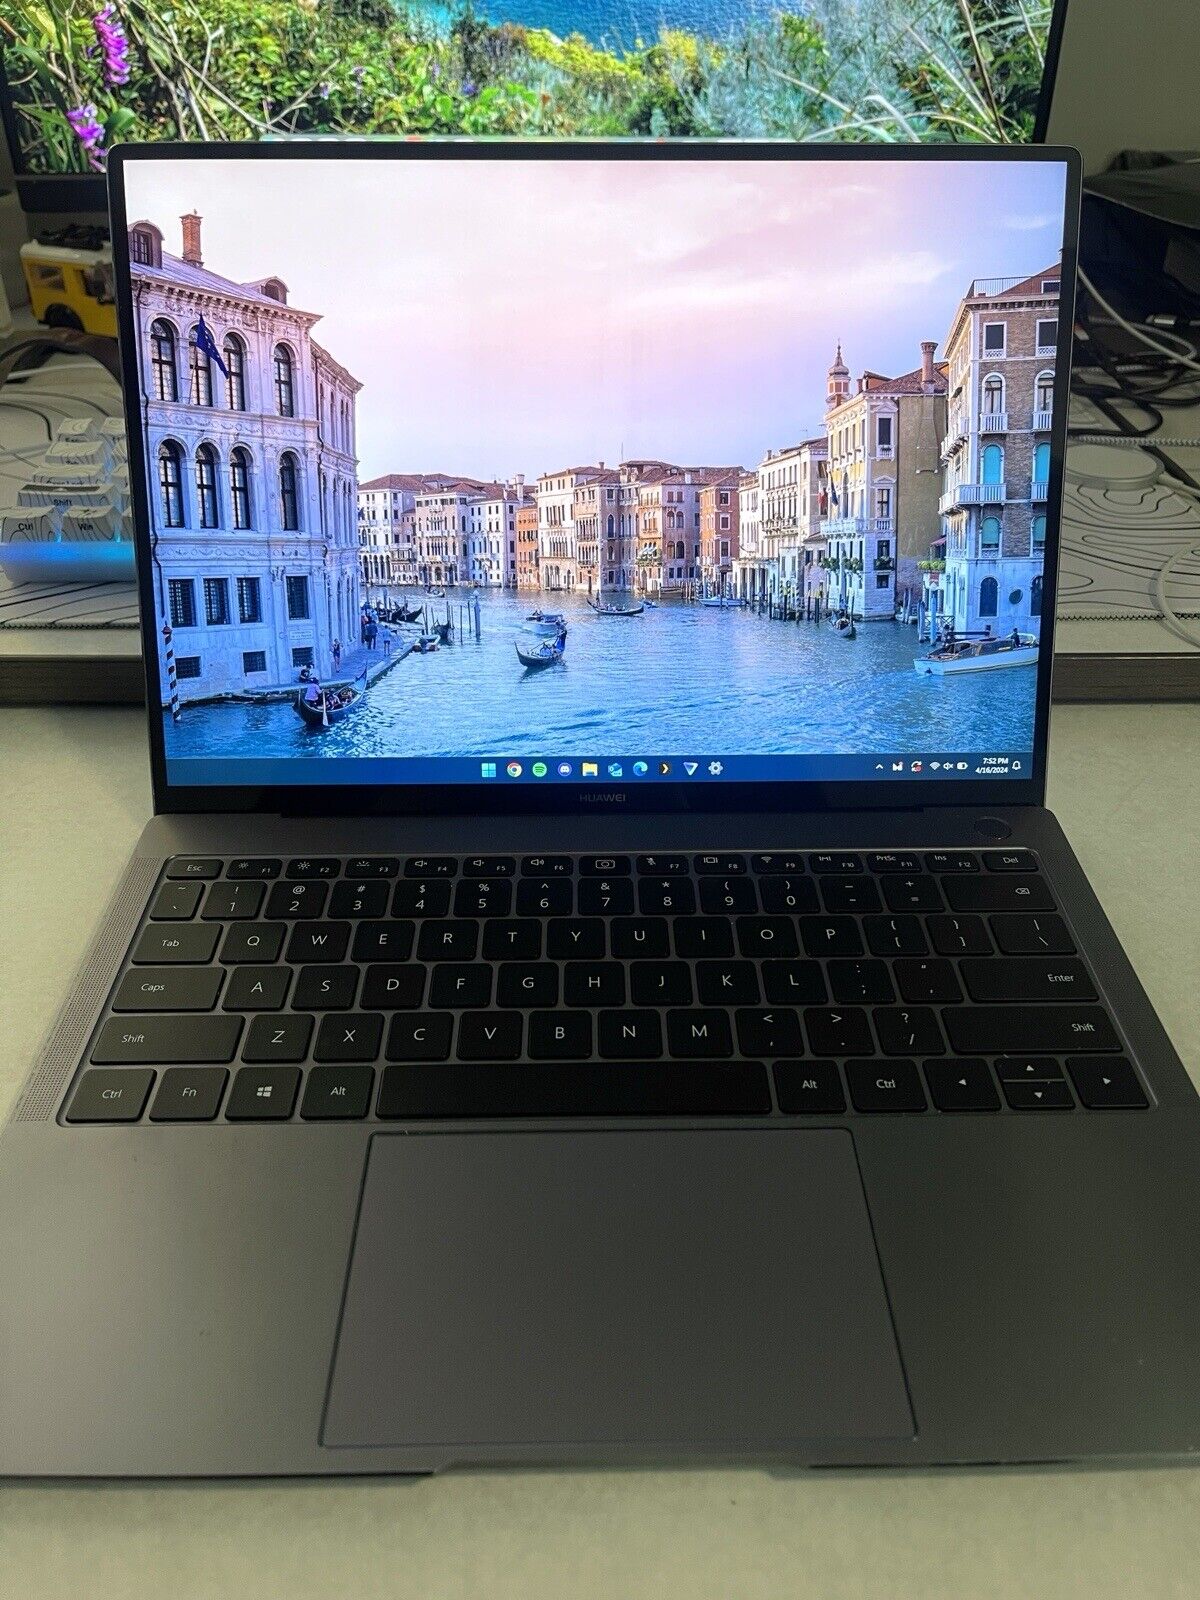 Huawei MateBook X Pro 13.9 inch (512GB, 16GB RAM, Intel i7-8550U @1.8GHz 1.99GHz